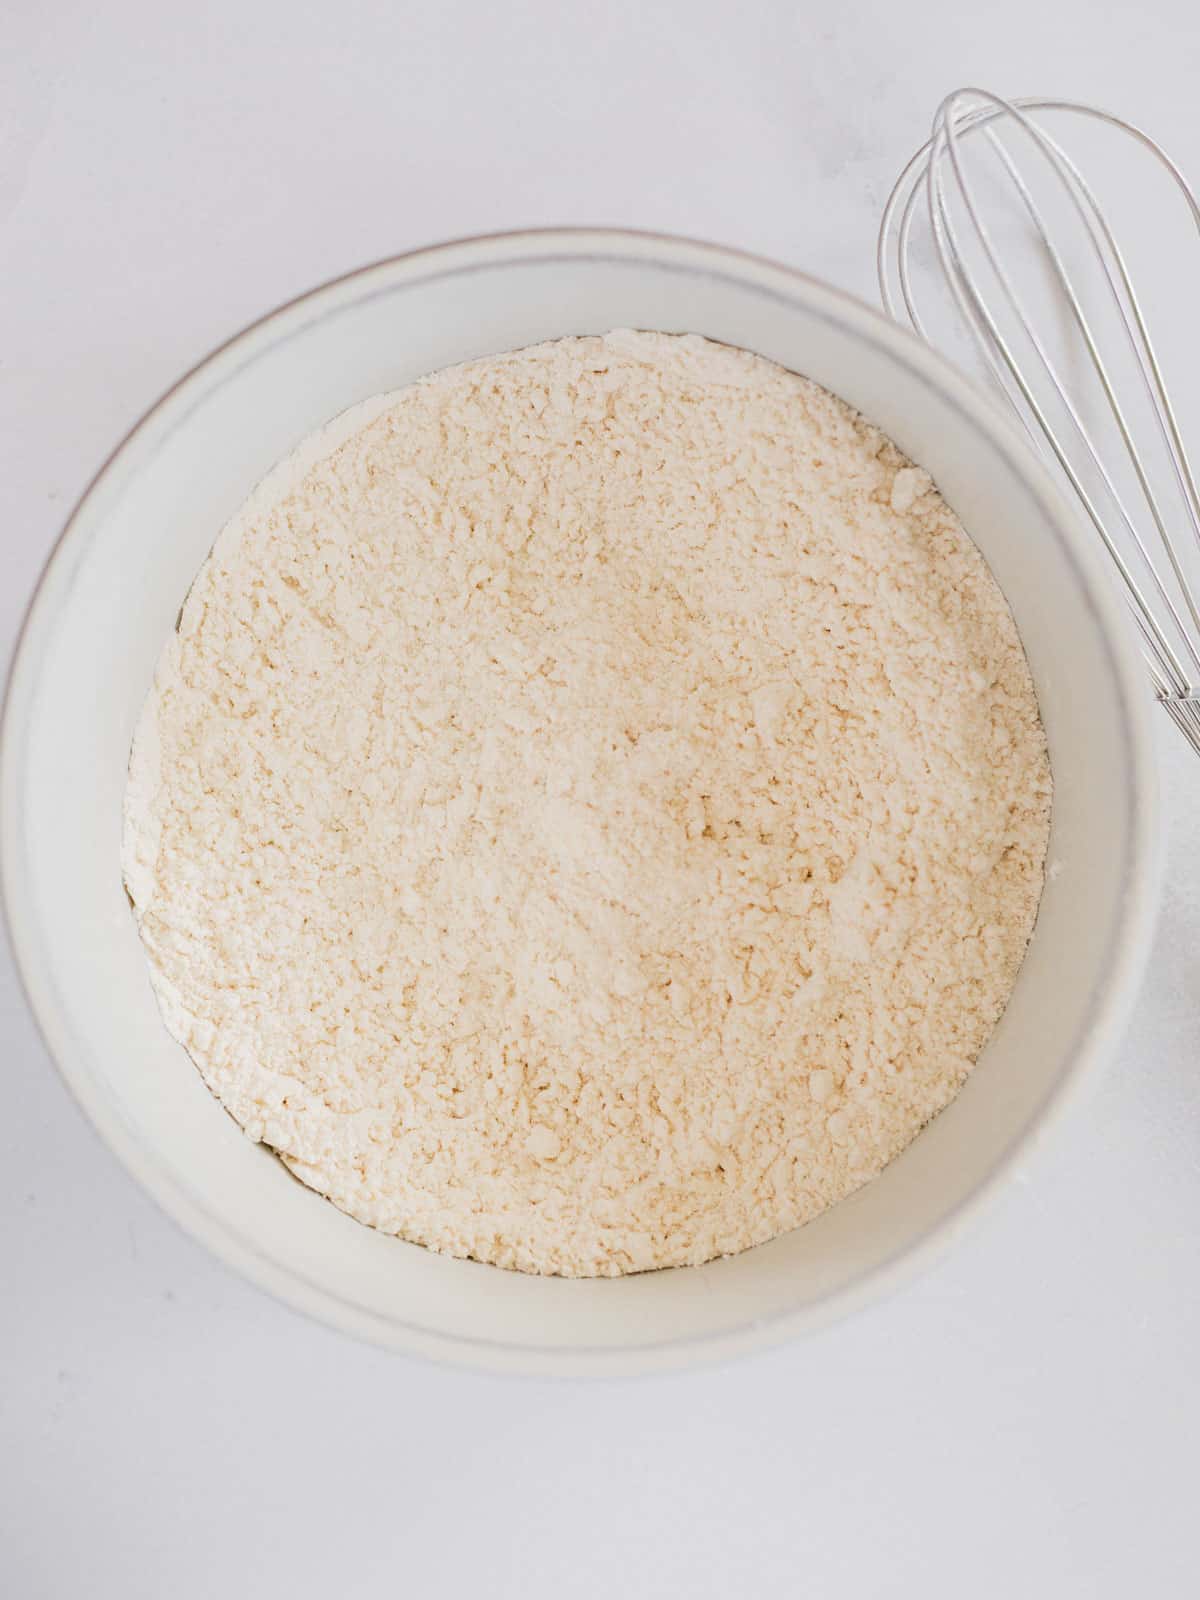 flour, baking powder, salt, and sugar in a white mixing bowl.